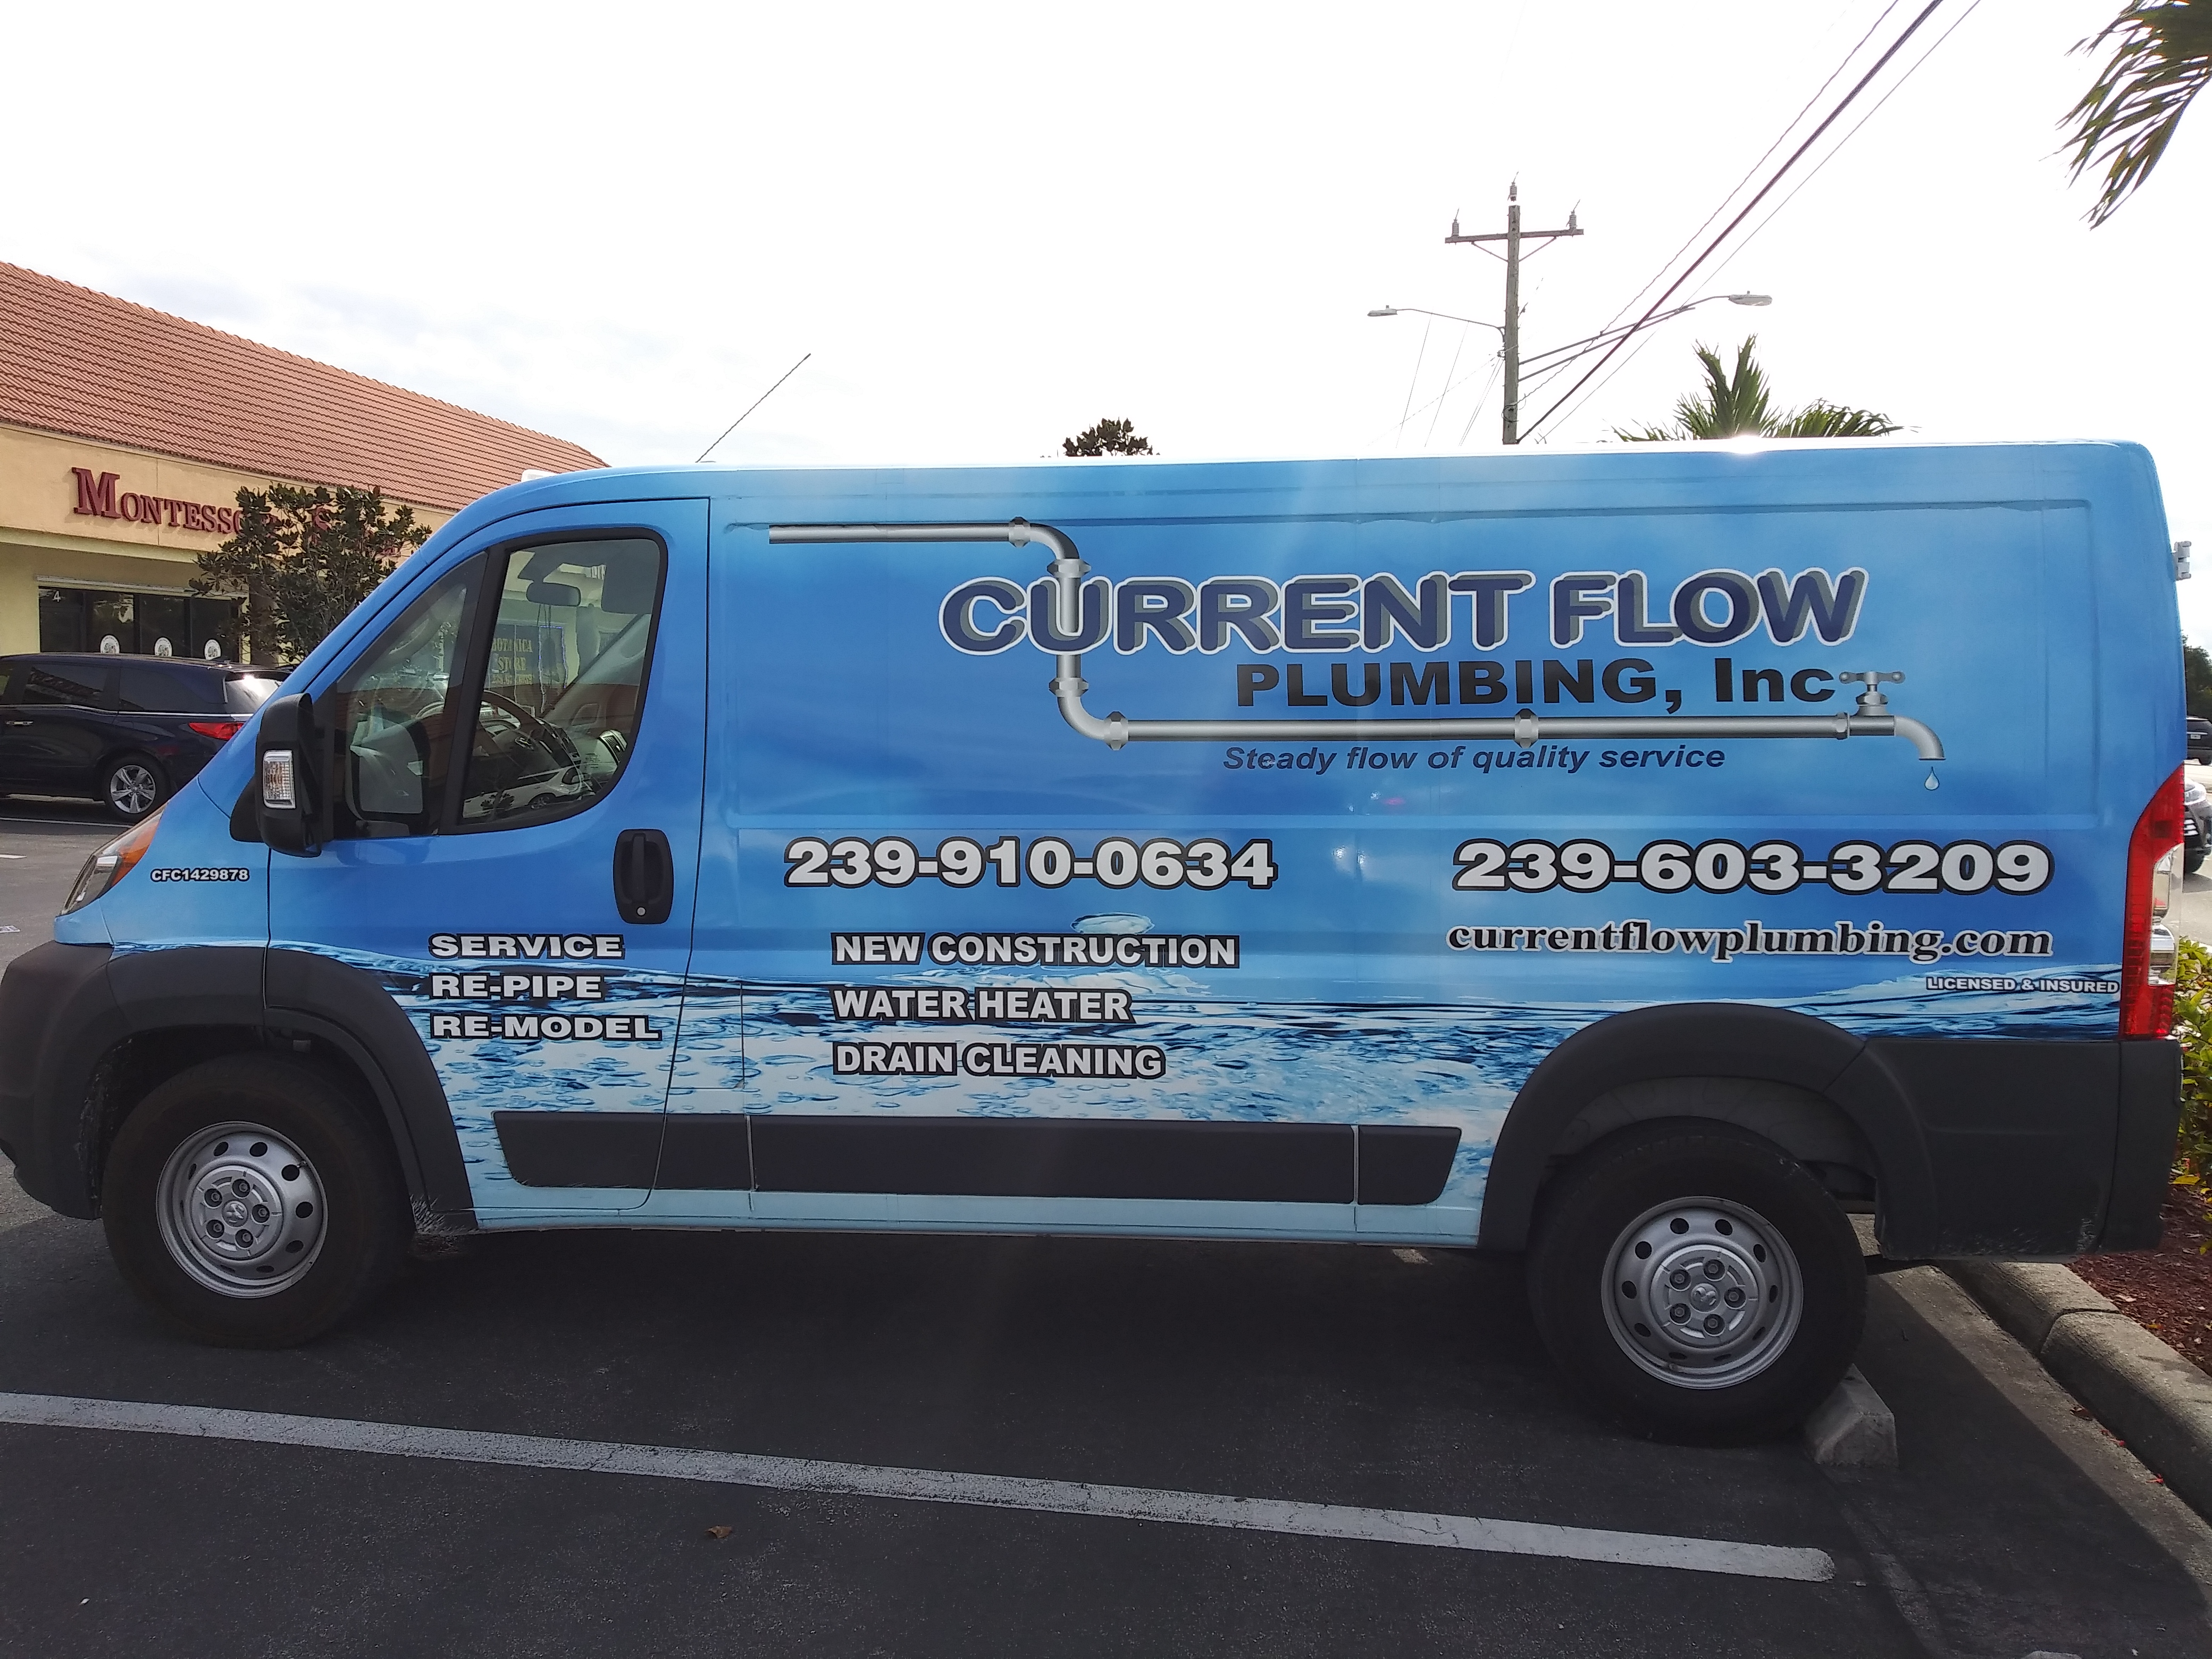 Current Flow Plumbing, Inc. Logo